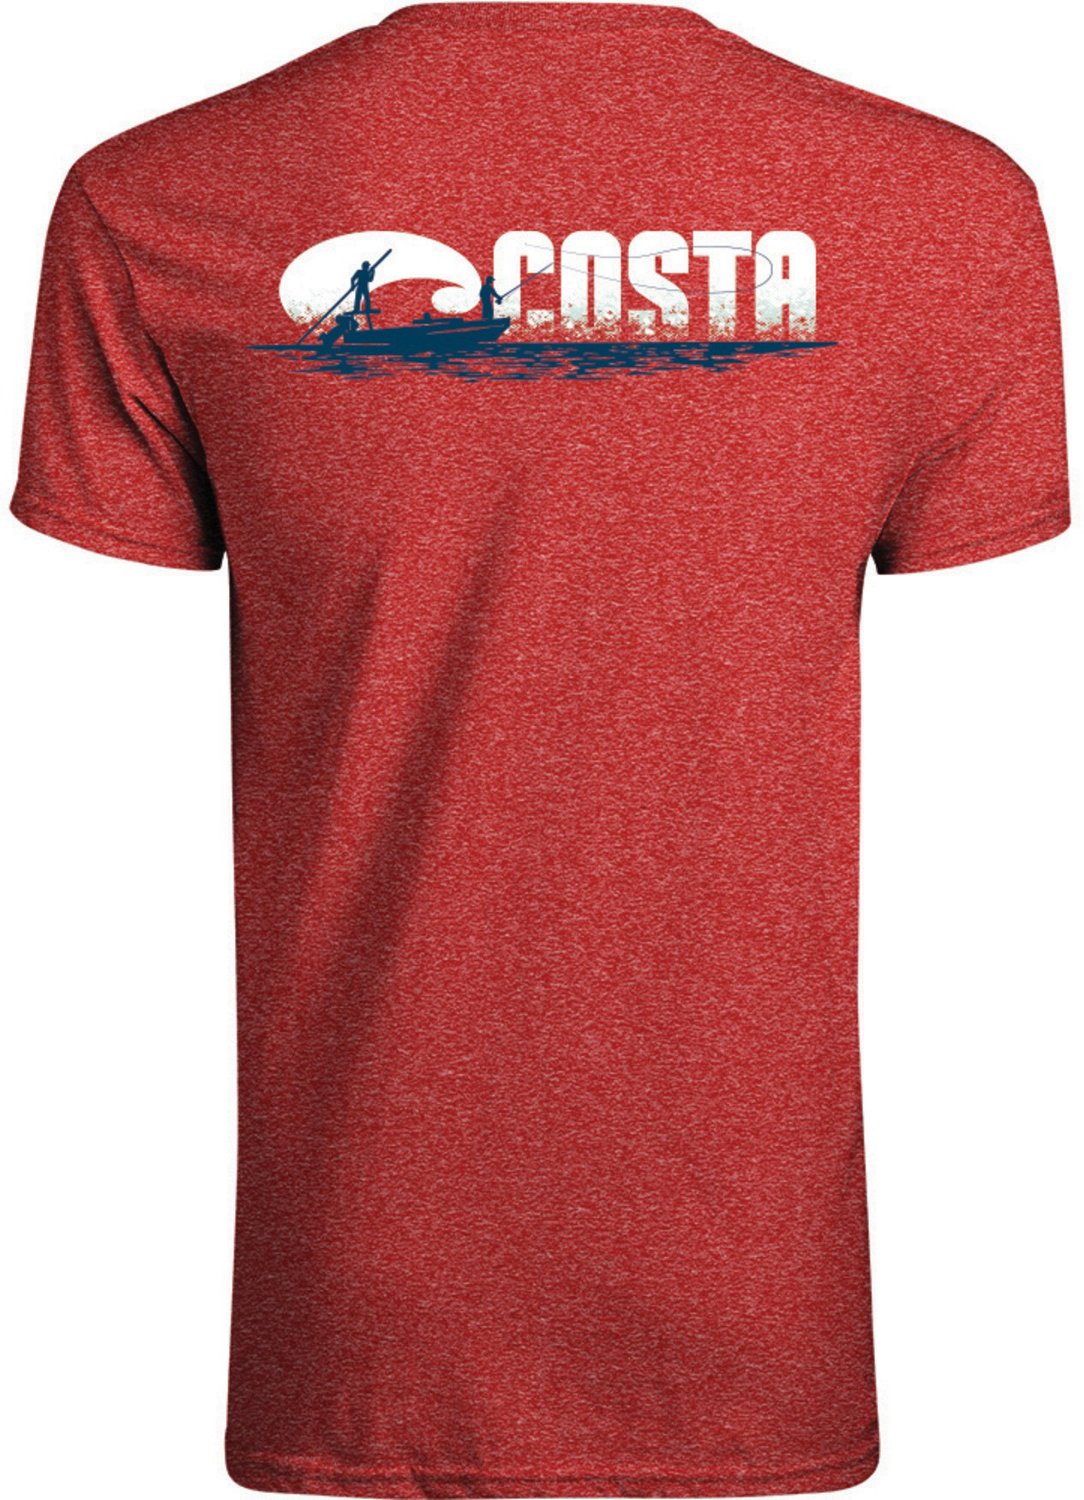 Costa Men's Clothing & Apparel